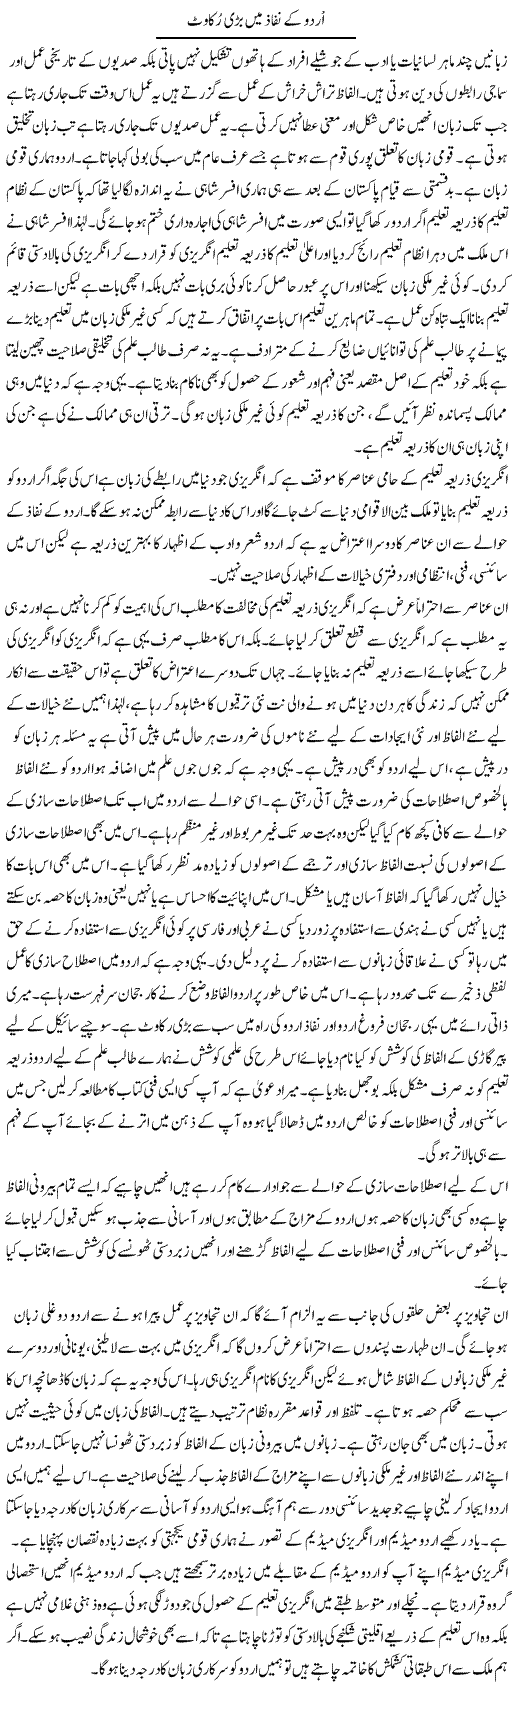 Urdu Ke Nifaz Mein Bari Rukawat | Jabbar Qureshi | Daily Urdu Columns